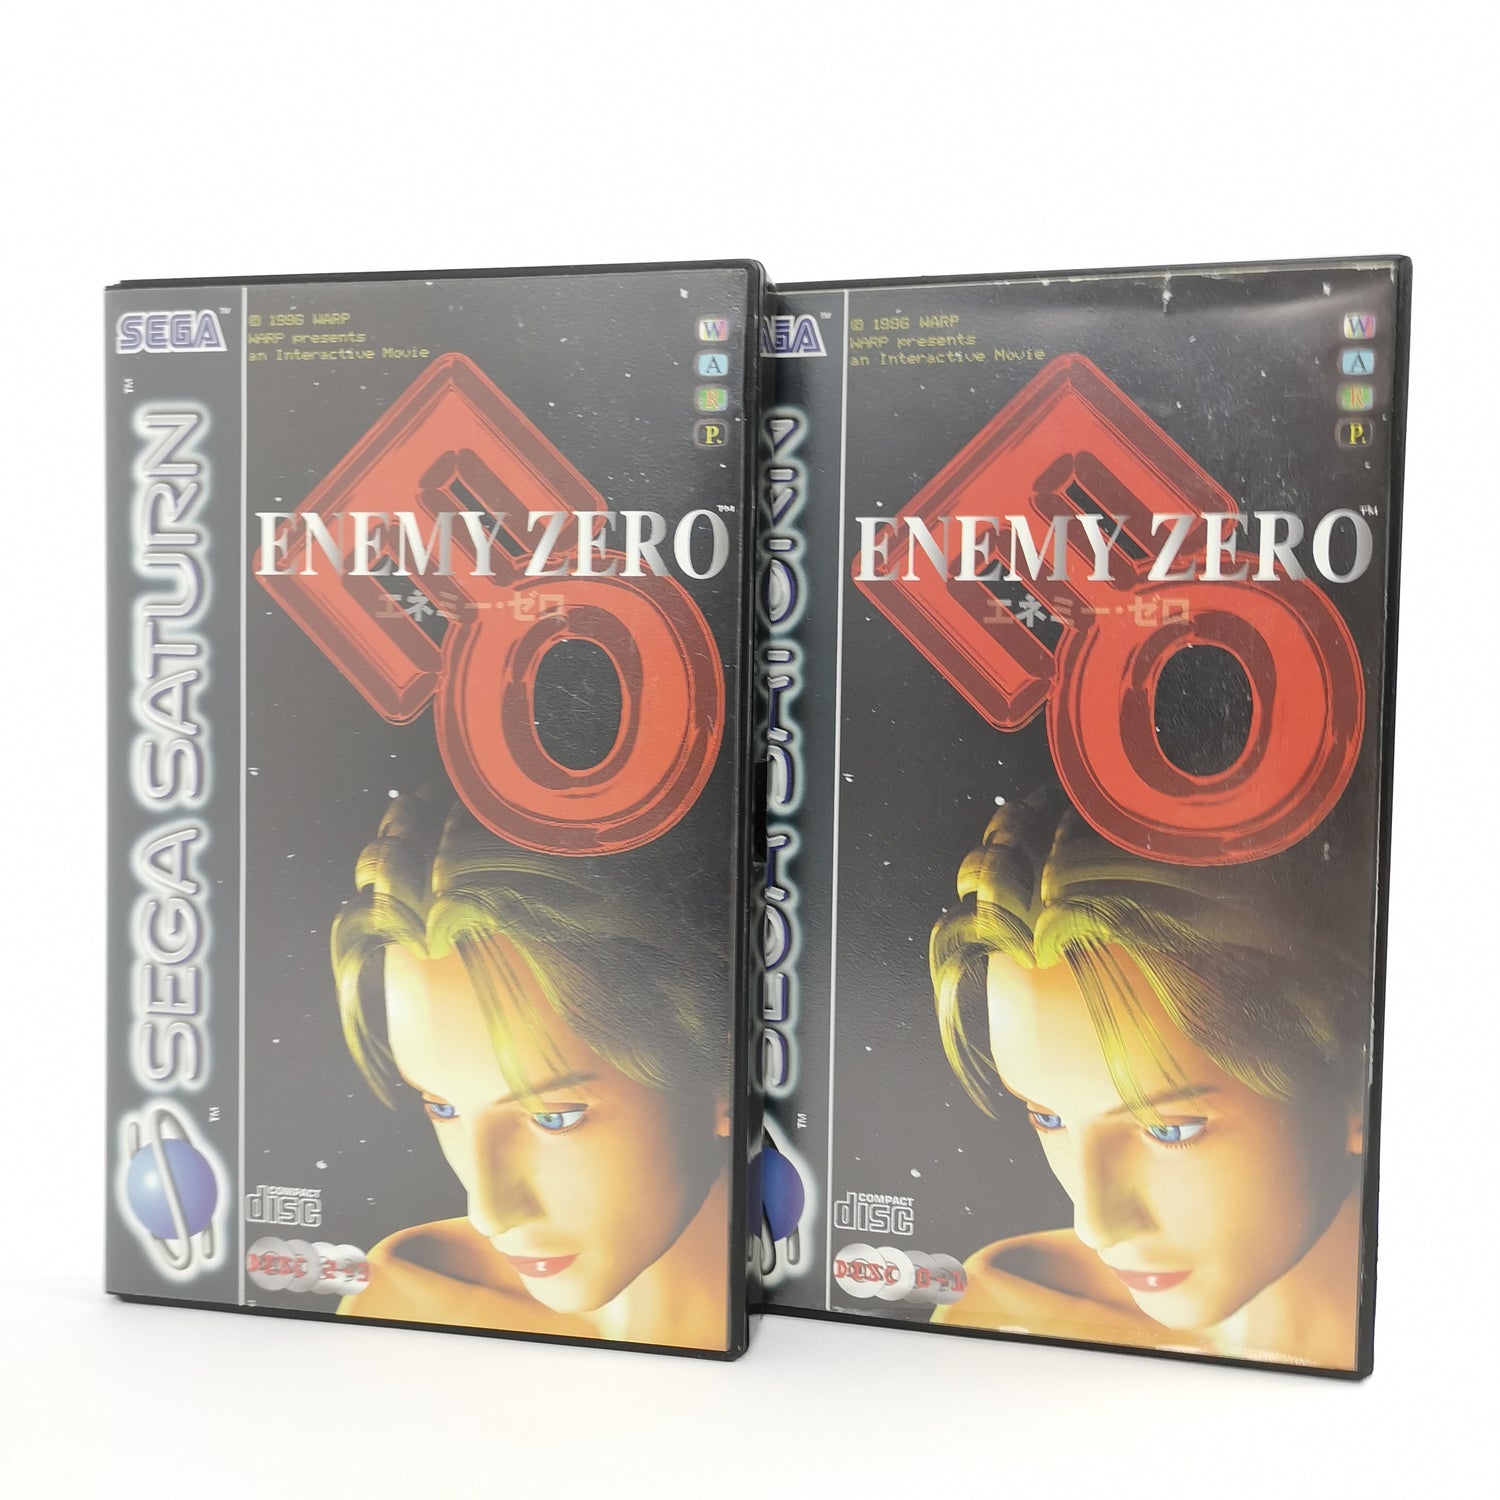 Sega Saturn Game: Enemy Zero | SegaSaturn - original packaging PAL version